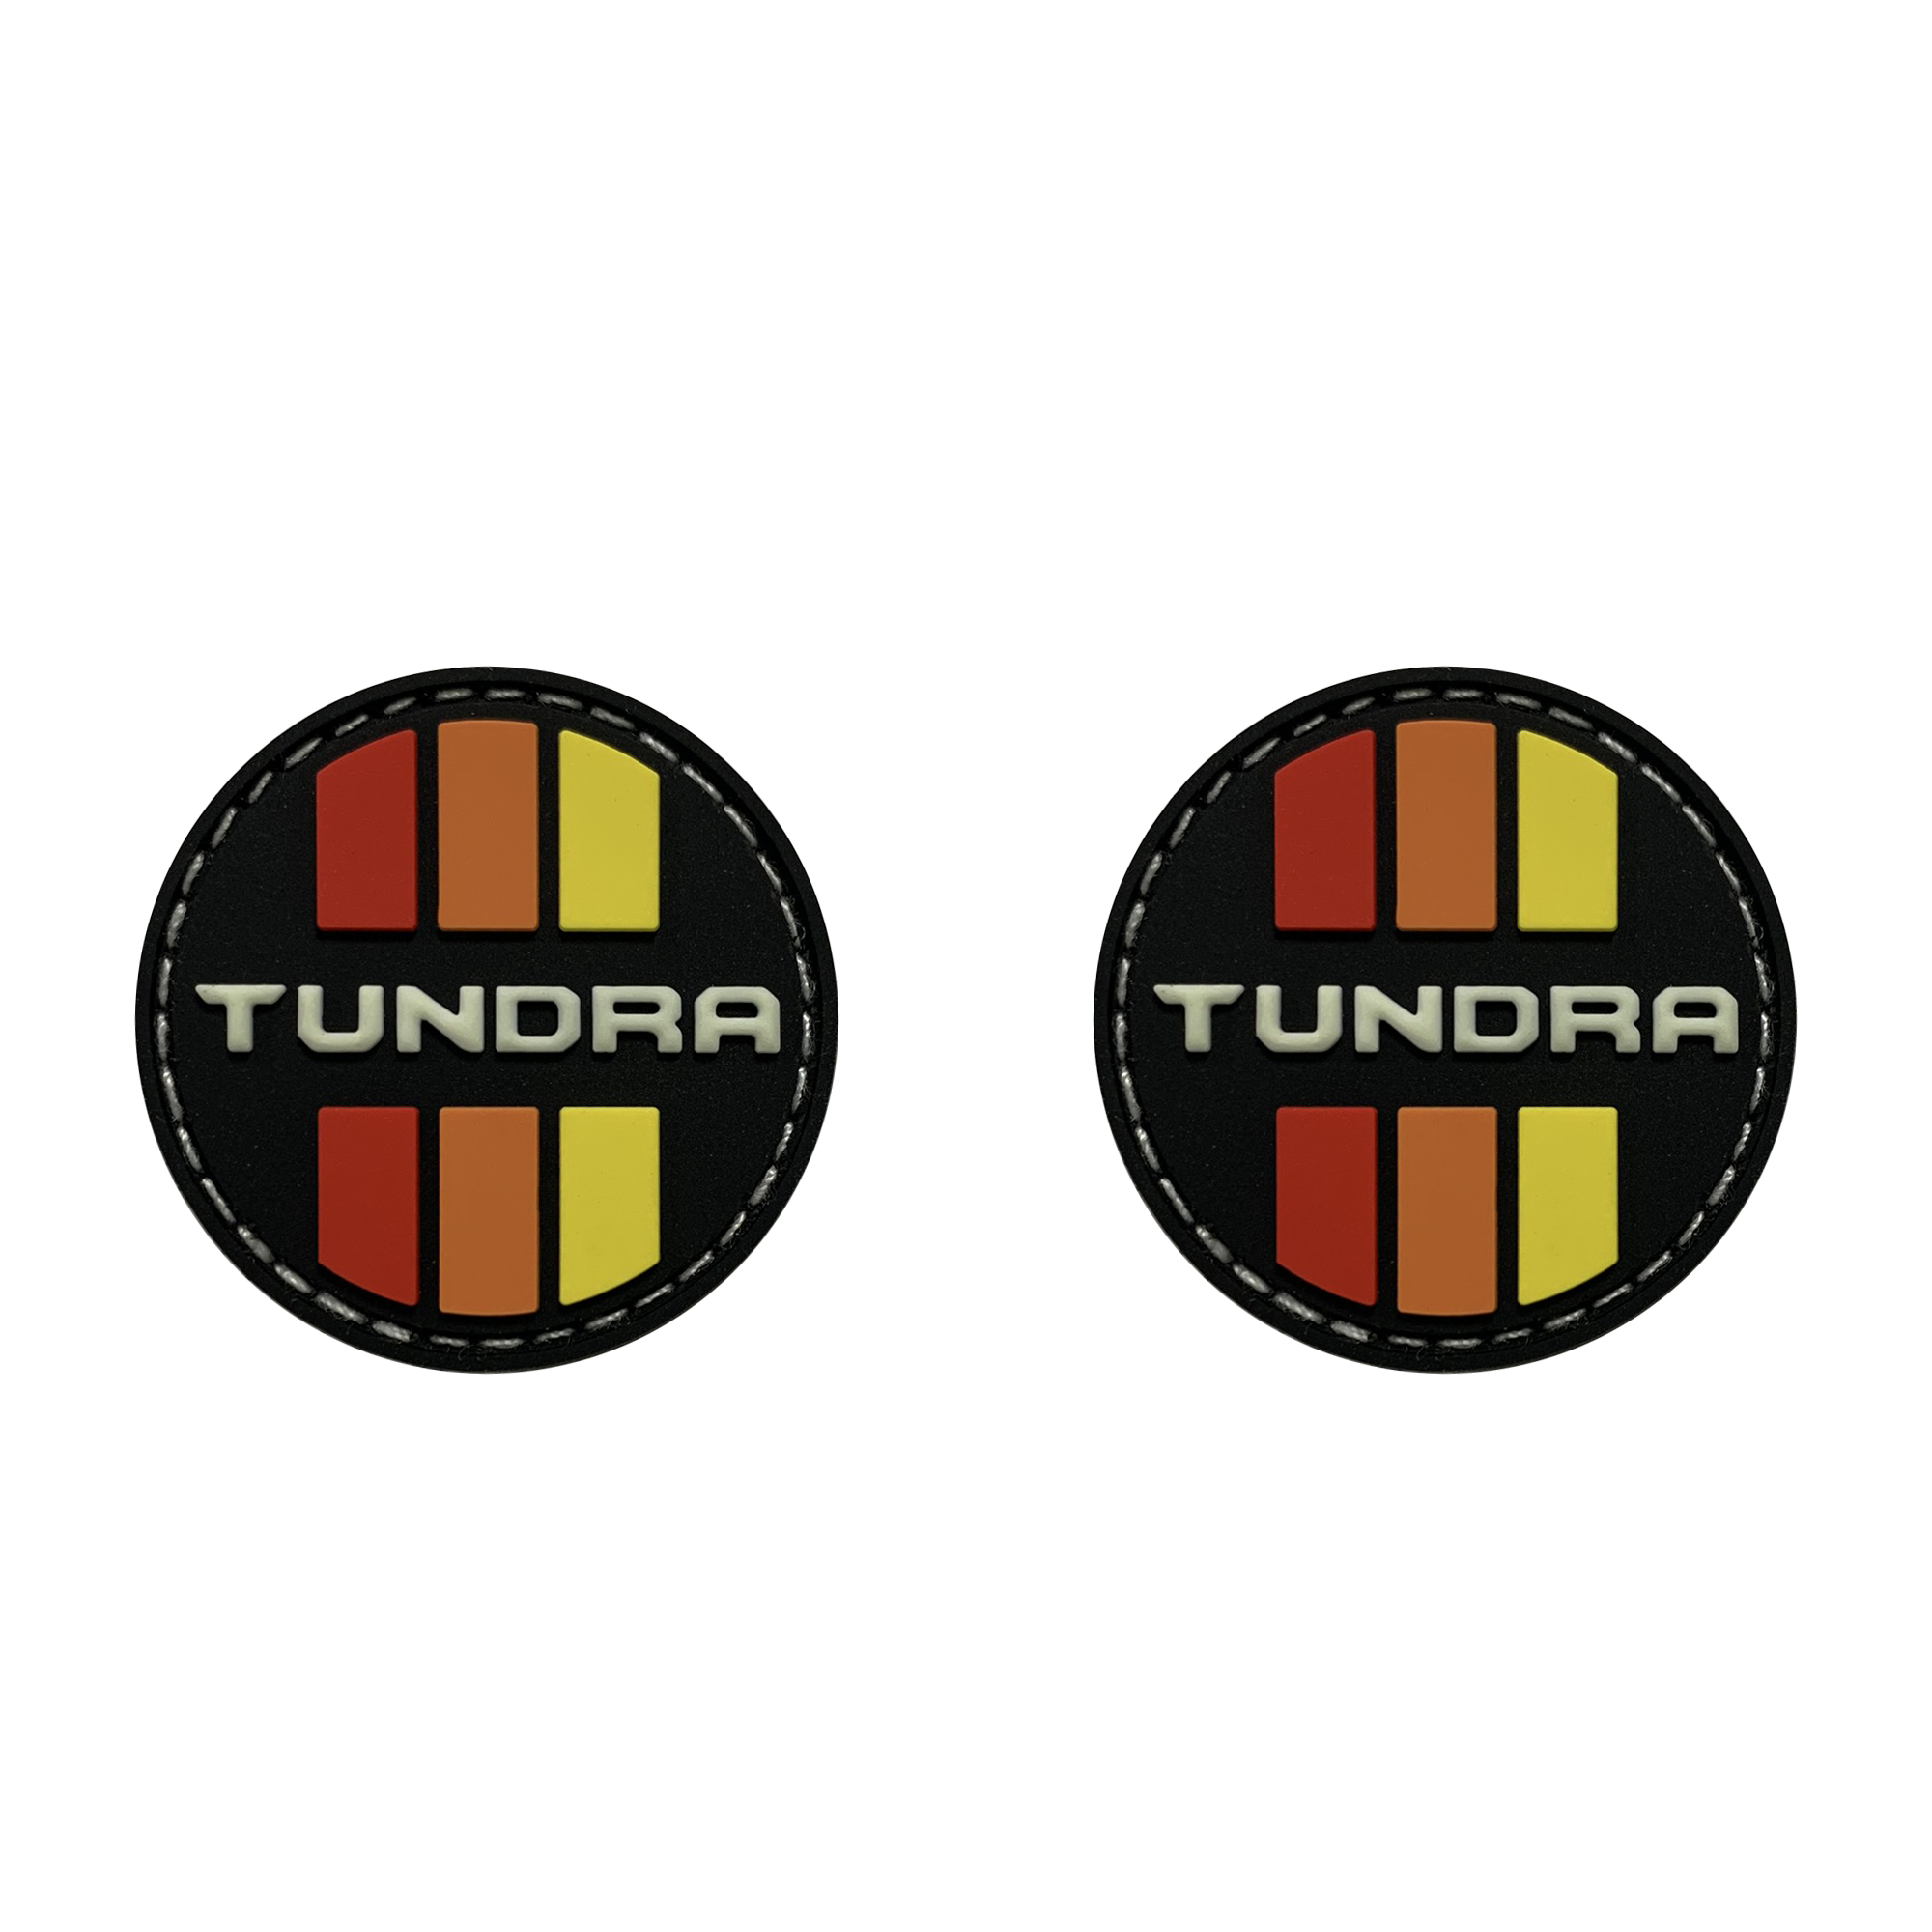 Tundra Retro Circle Ranger Eye Patches - GZila Designs